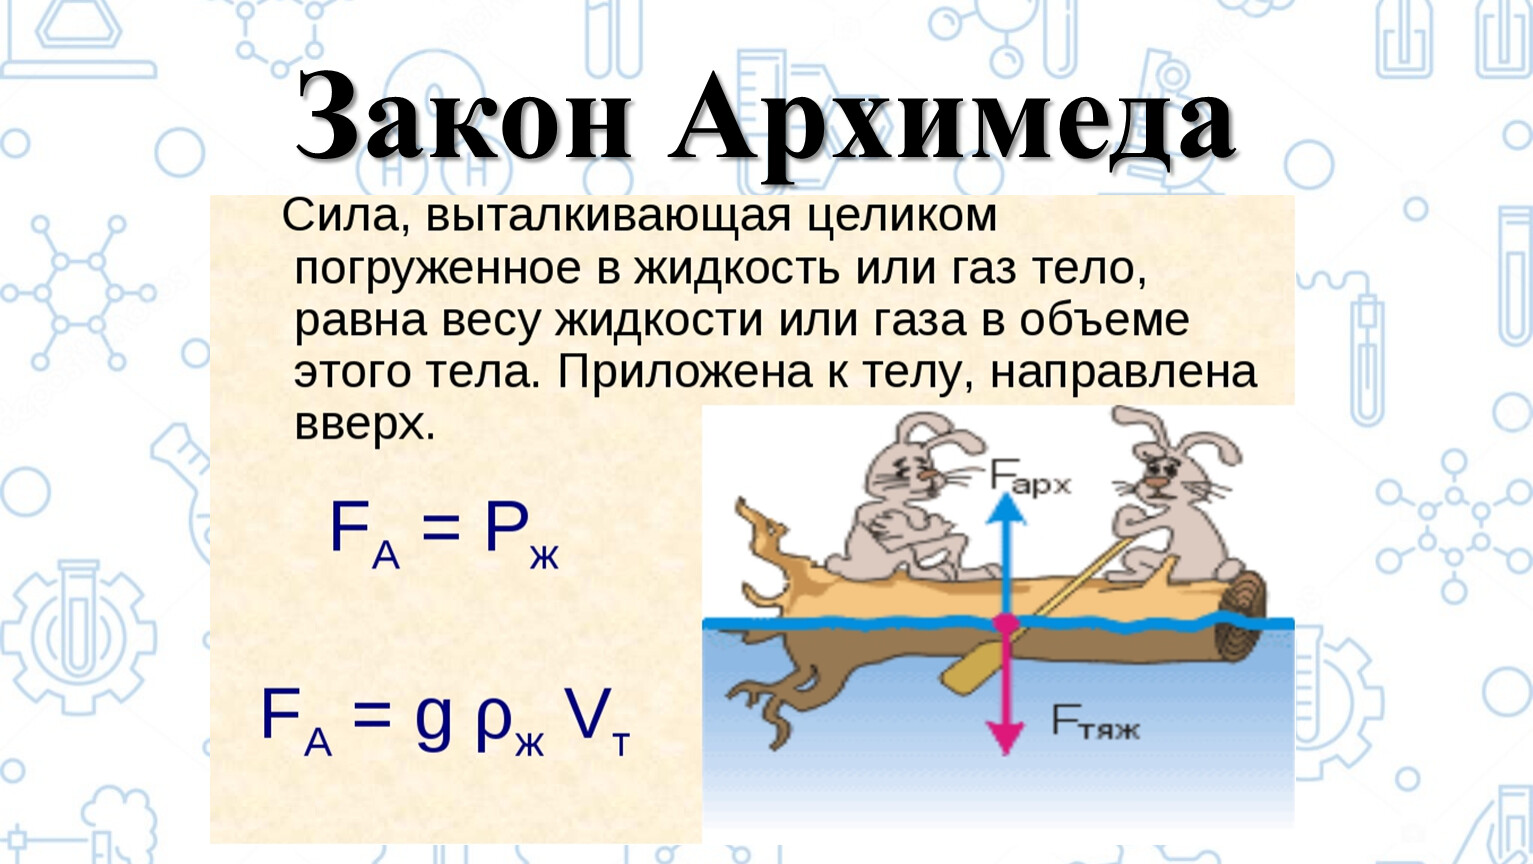 Сила архимеда 2 формулы. Формулы по физике 7 класс сила Архимеда. Сила Архимеда формула 7 класс. Сила Архимеда 7 класс физика. Закон Архимеда 7 класс физика формула.